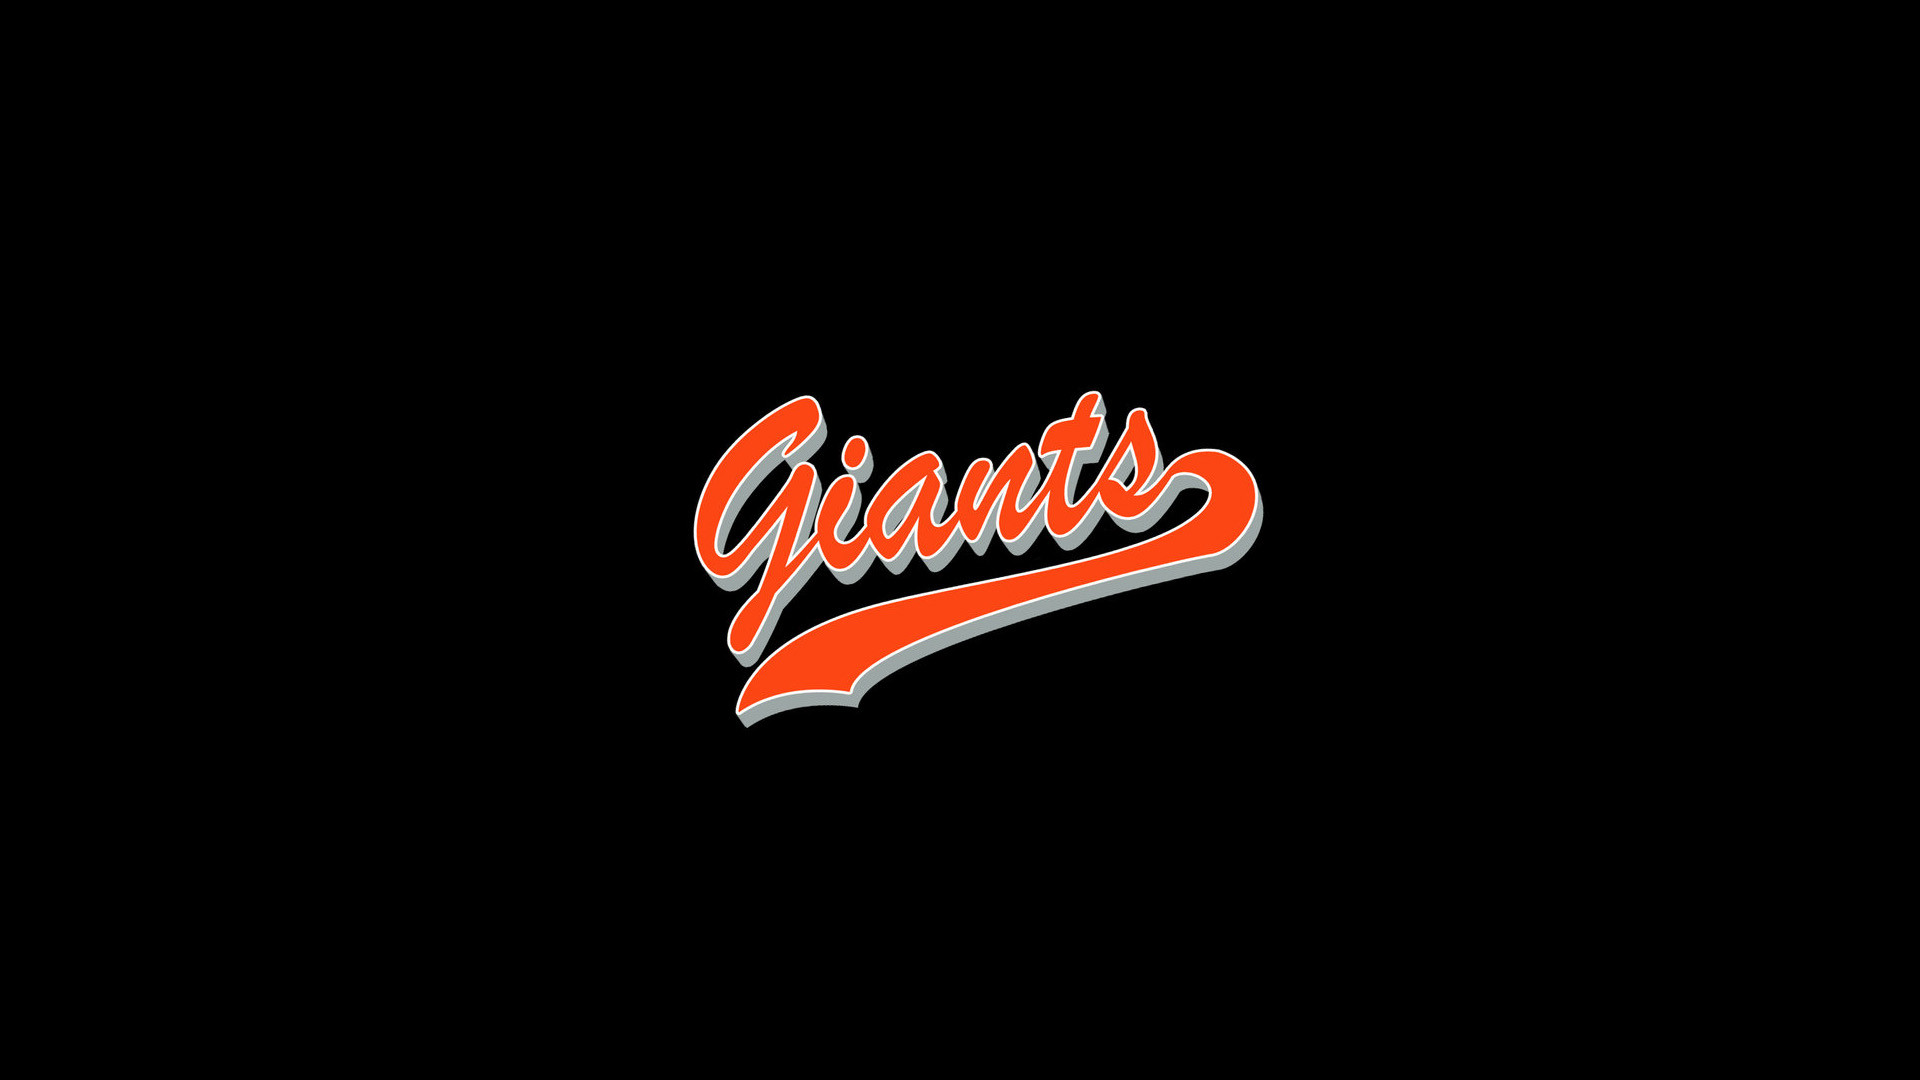 San Francisco Giants Wallpapers  Top 35 Best San Francisco Giants  Backgrounds